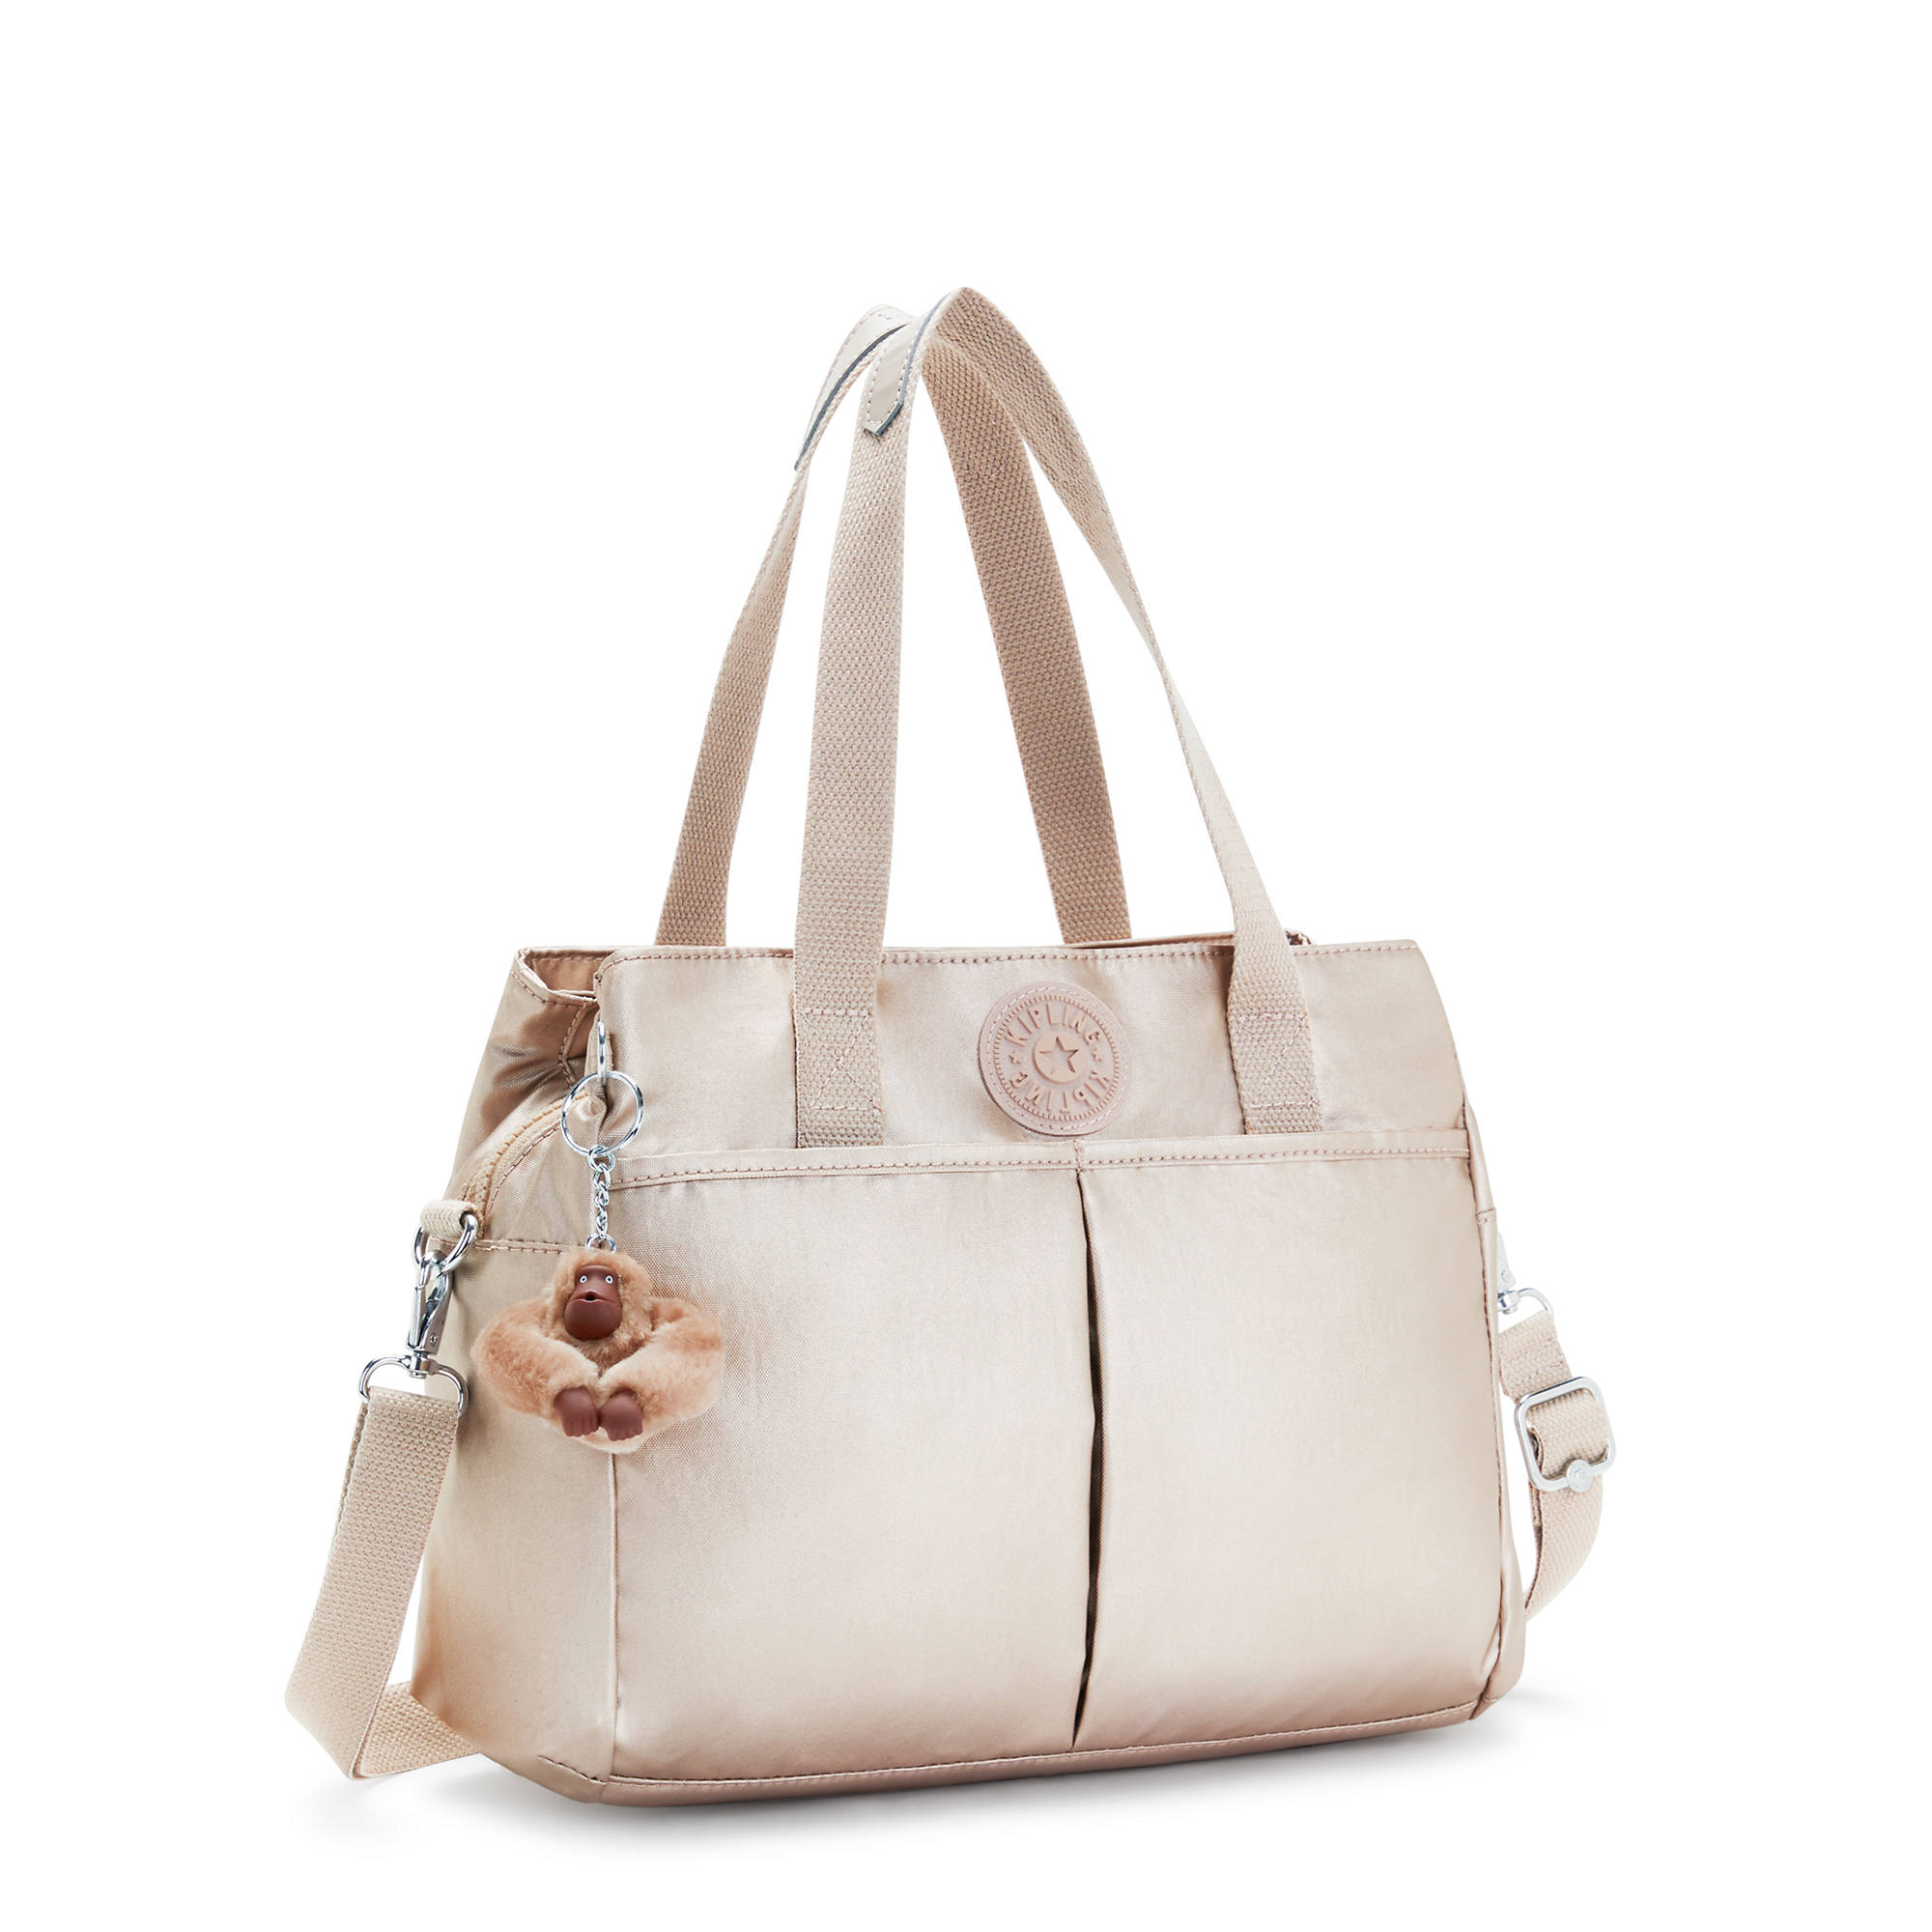 Kipling Kenzie Metallic Shoulder Bag Quartz Metallic | eBay